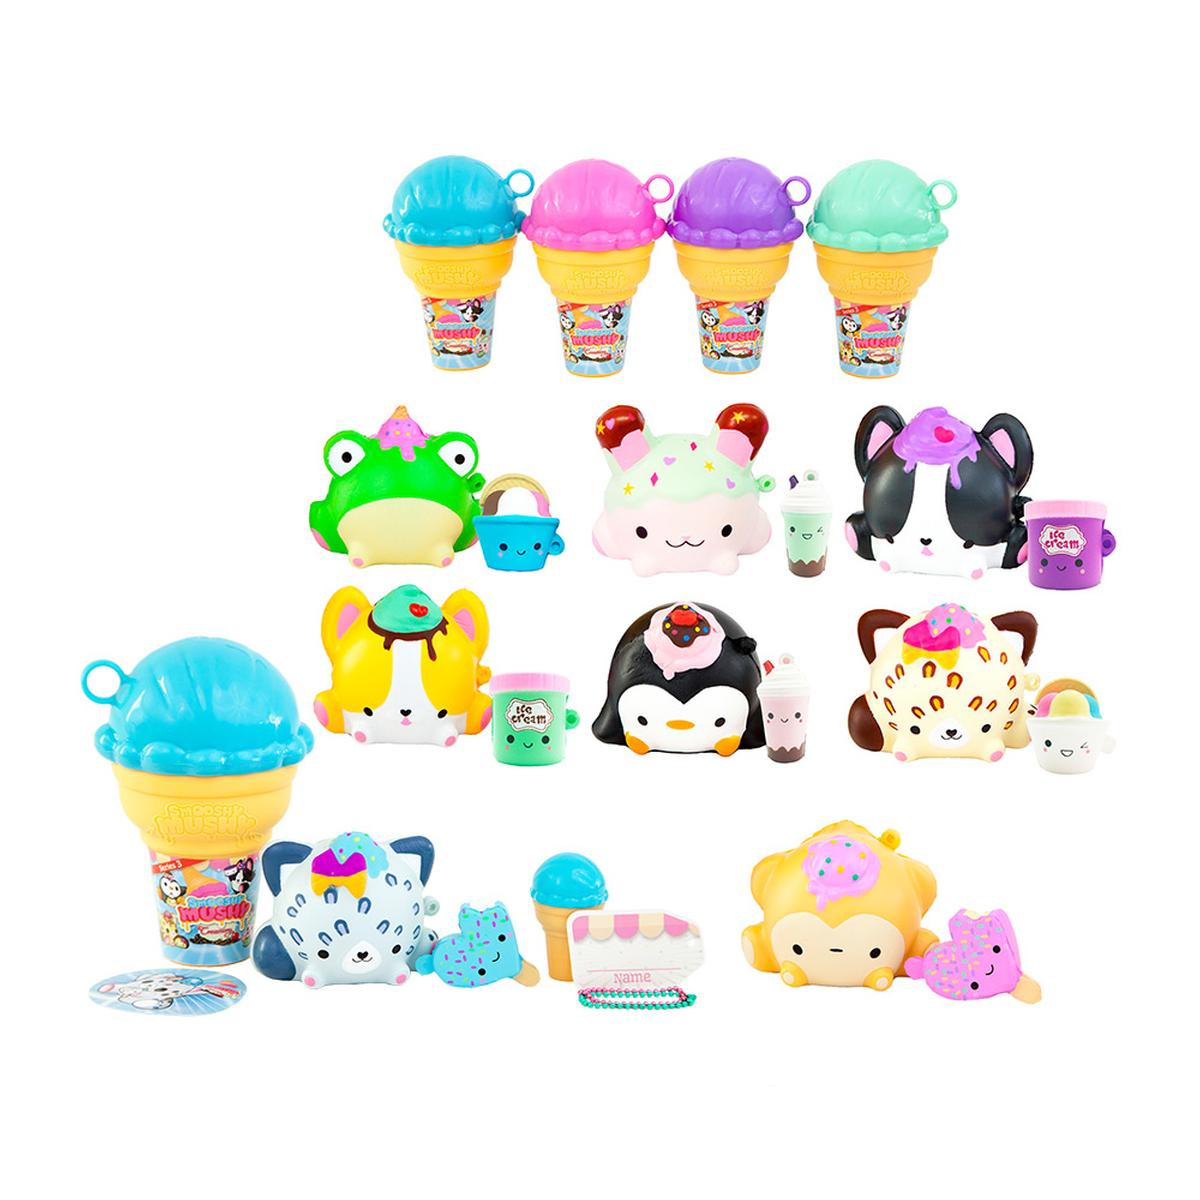 Smooshy Mushy - Pack 1 Smooshy Creamery (vários modelos) | SQUISHIES | Loja  de brinquedos e videojogos Online Toysrus